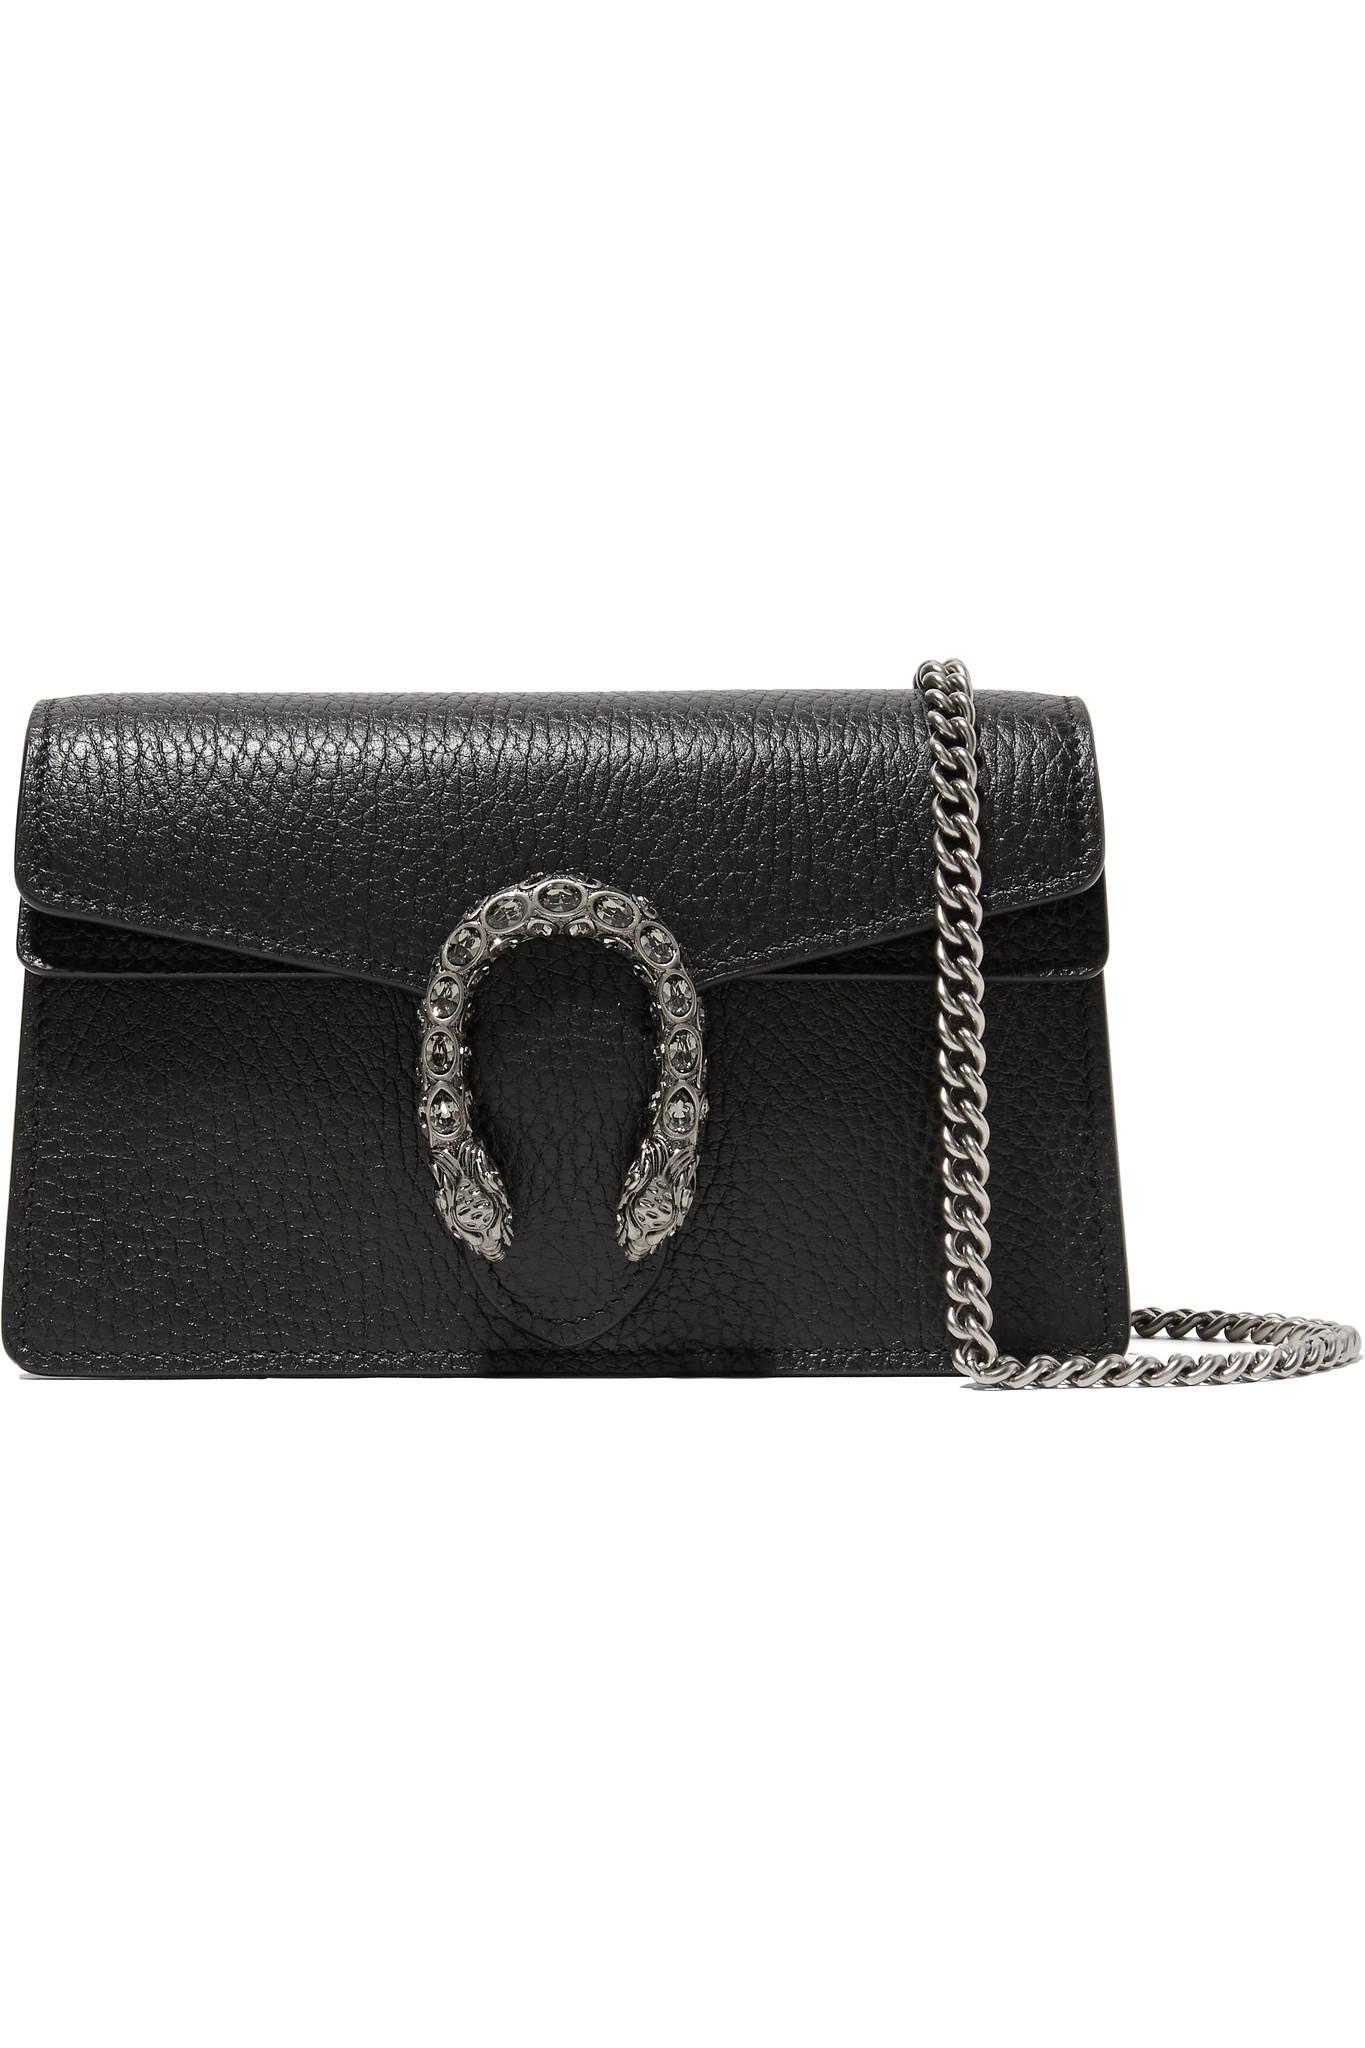 Lyst - Gucci Dionysus Super Mini Textured-leather Shoulder Bag in Black